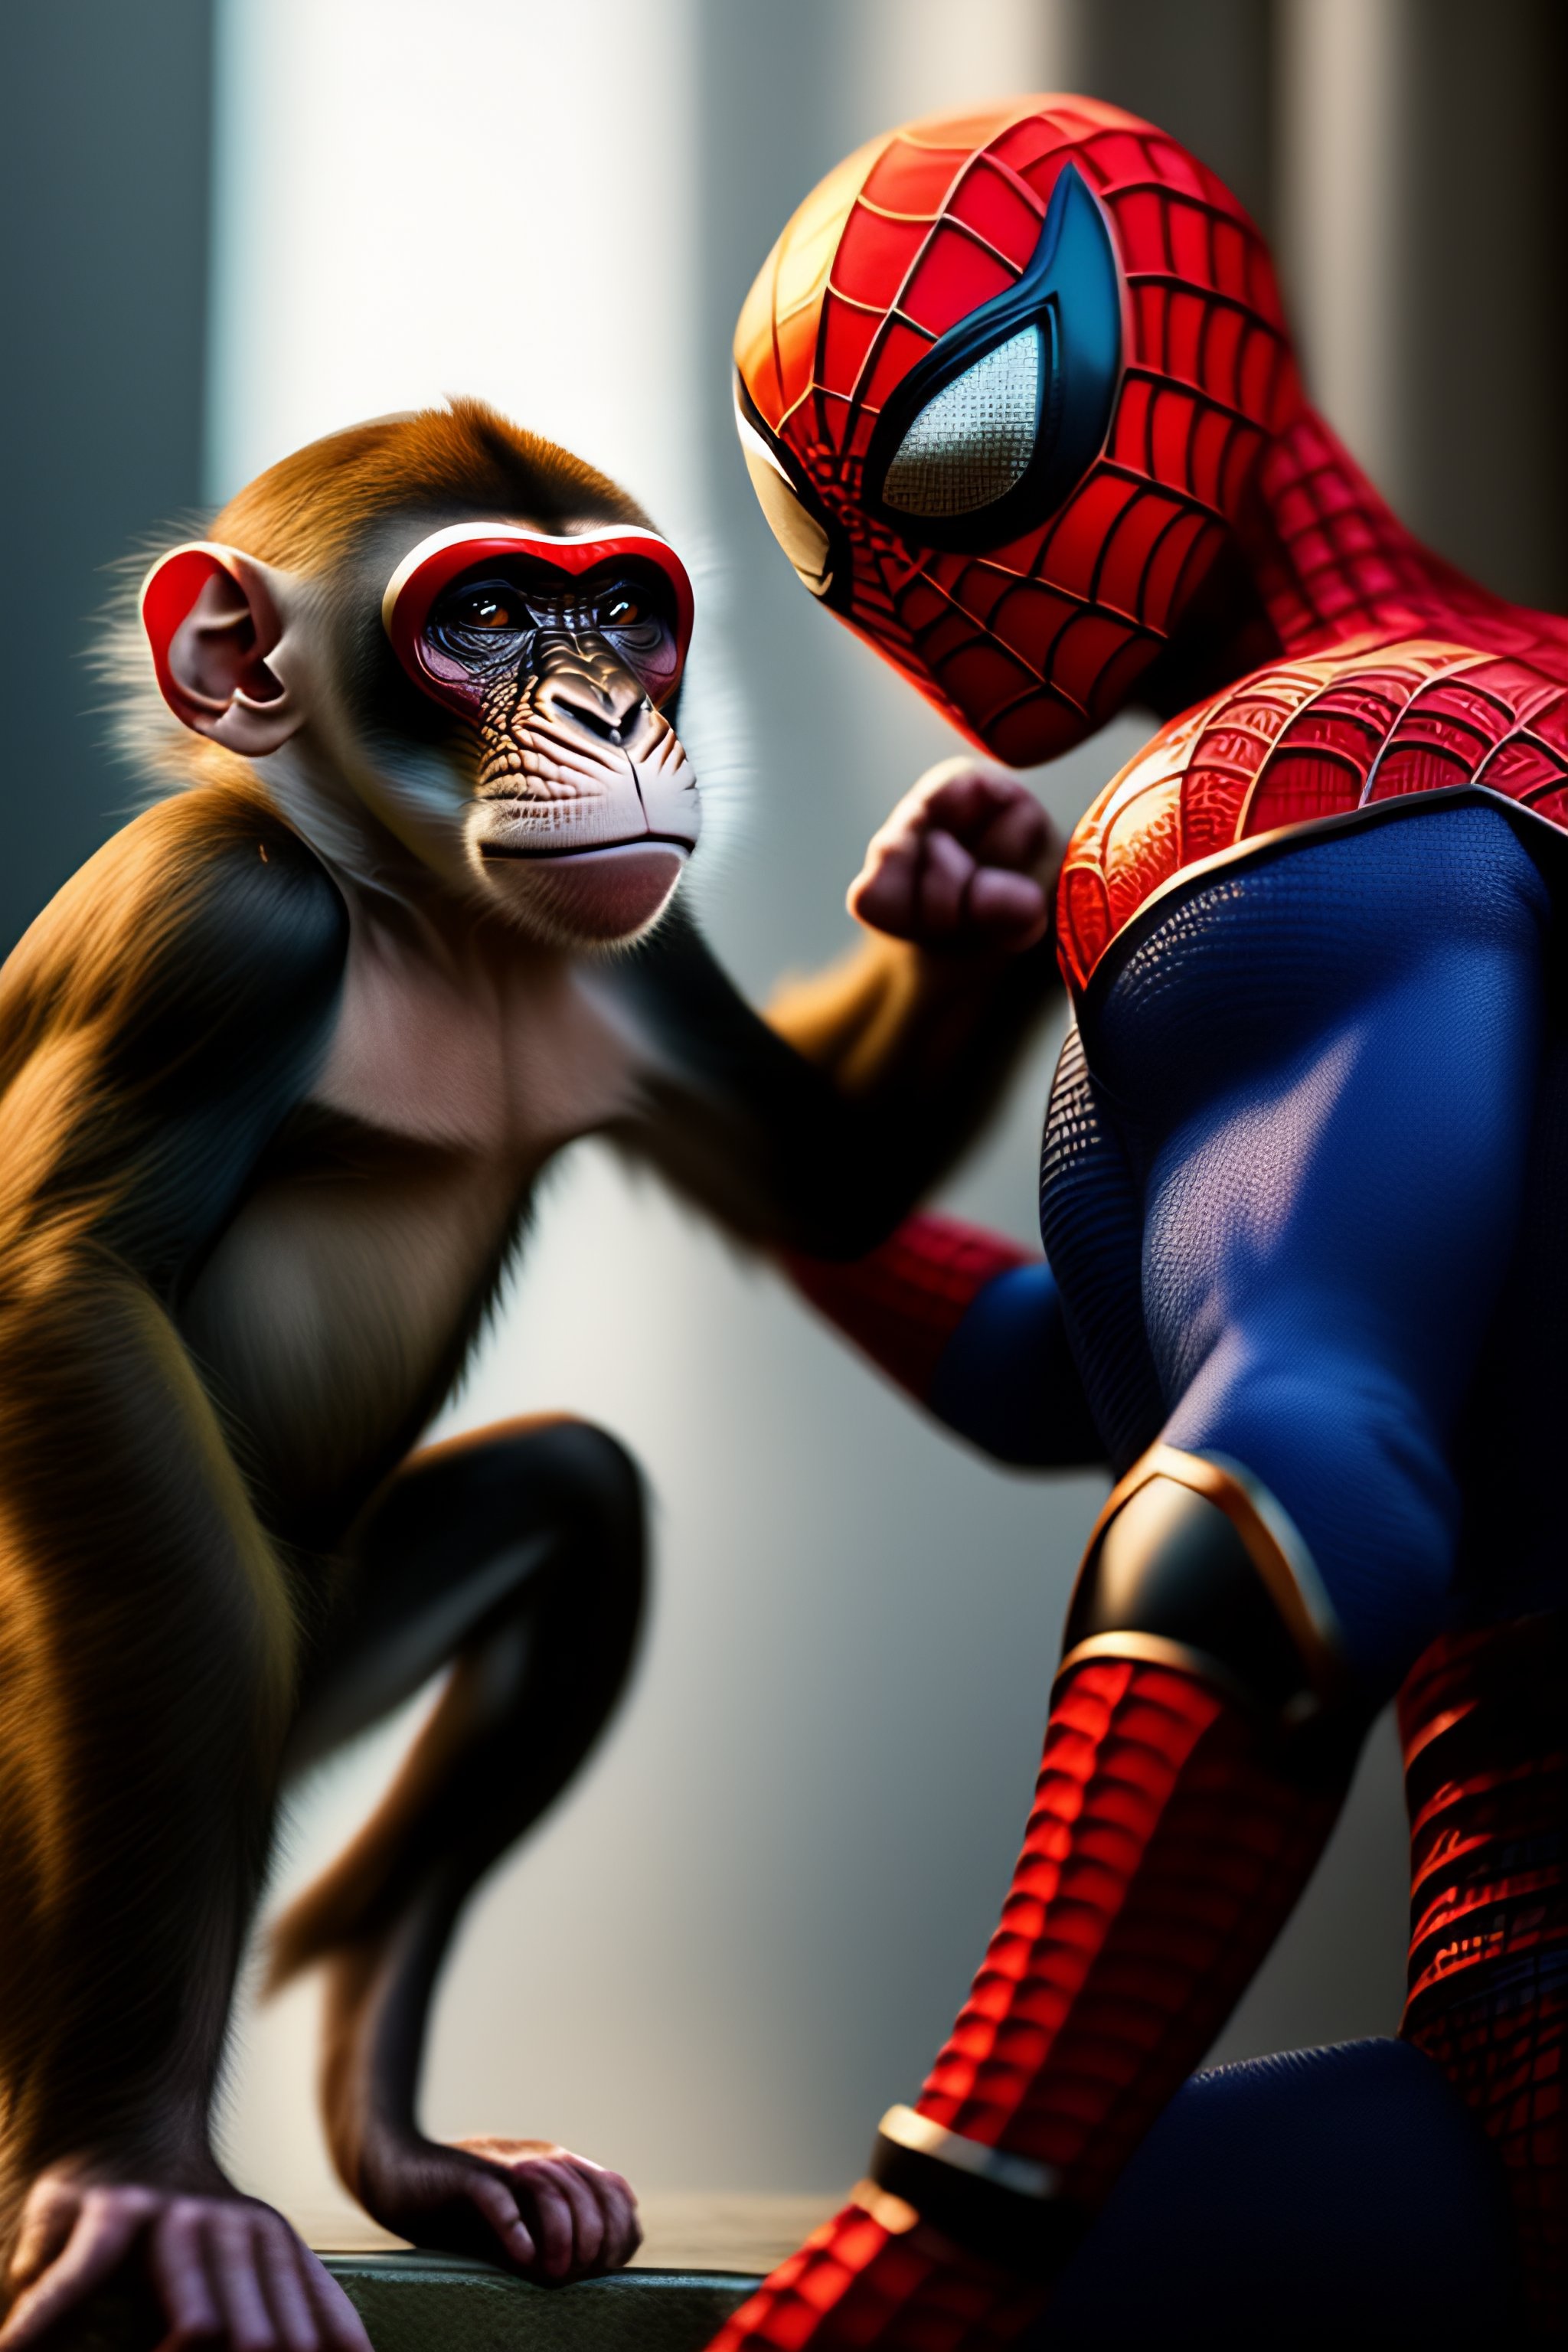 spider man vs spider monkey